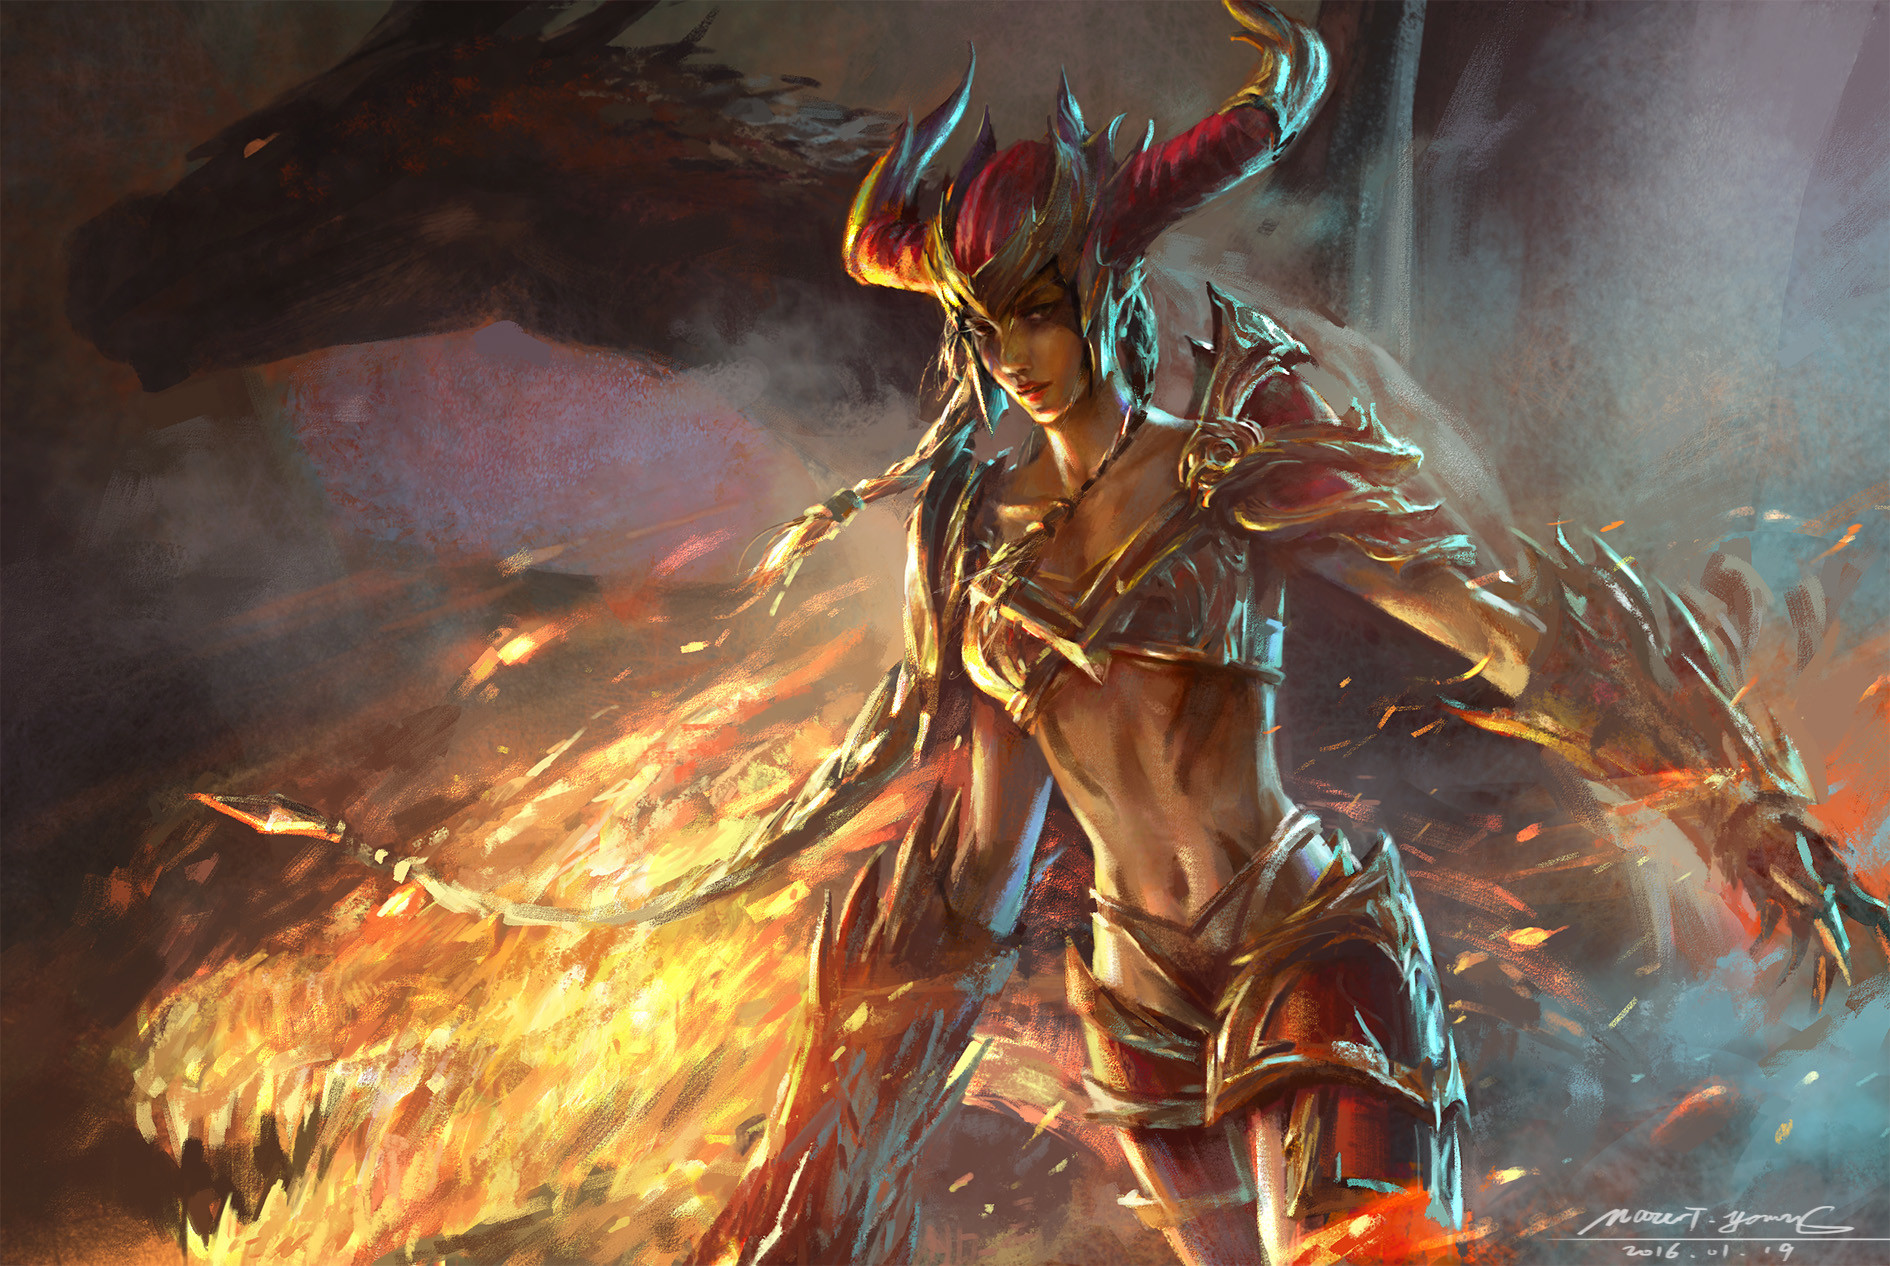 General 1890x1266 League of Legends Shyvana fire Mazert Young fantasy art fantasy girl dragon creature looking at viewer helmet artwork ArtStation 2016 (year)